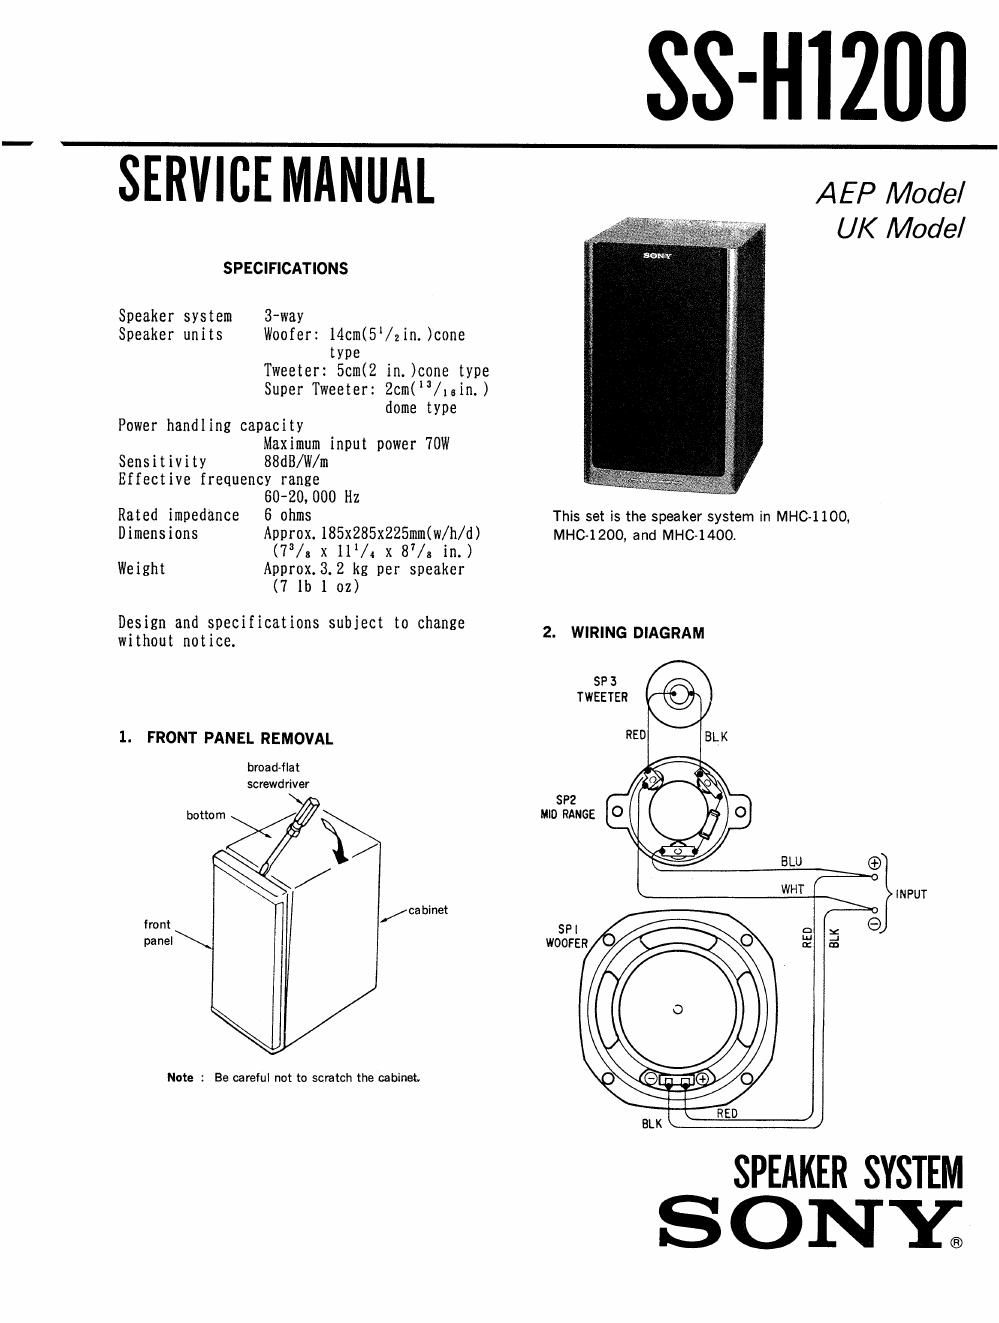 sony ss h 1200 service manual